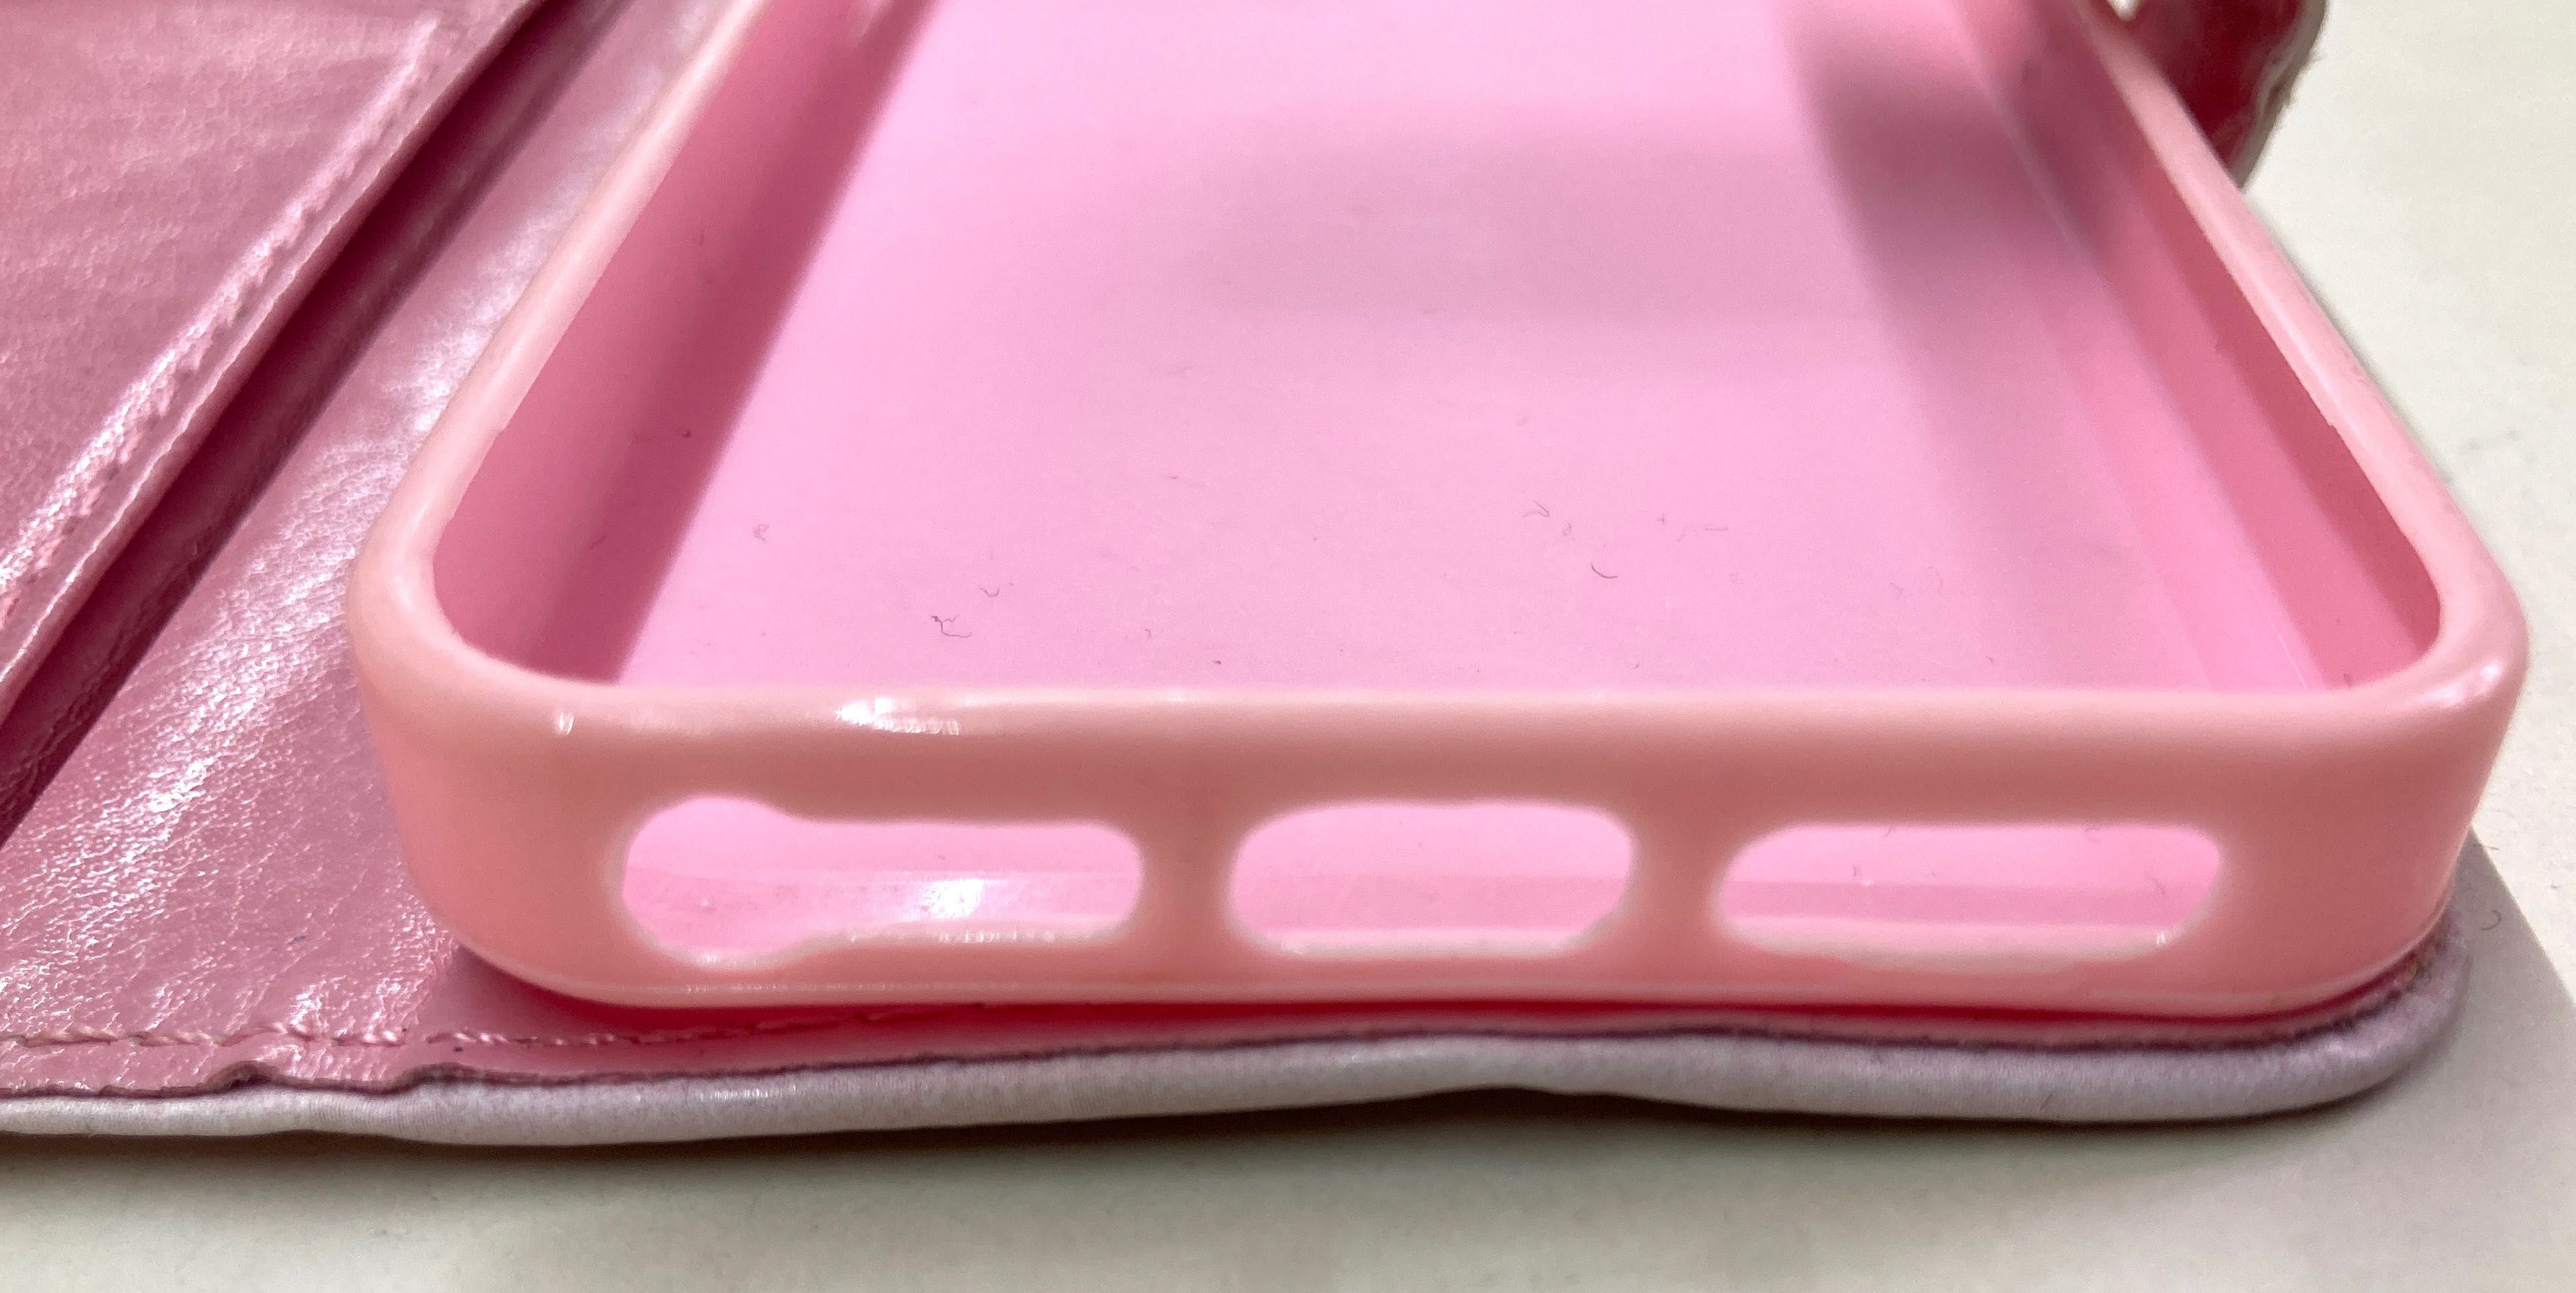 iPhone 5, 5S, SE  ETUI flamingi składane portfel